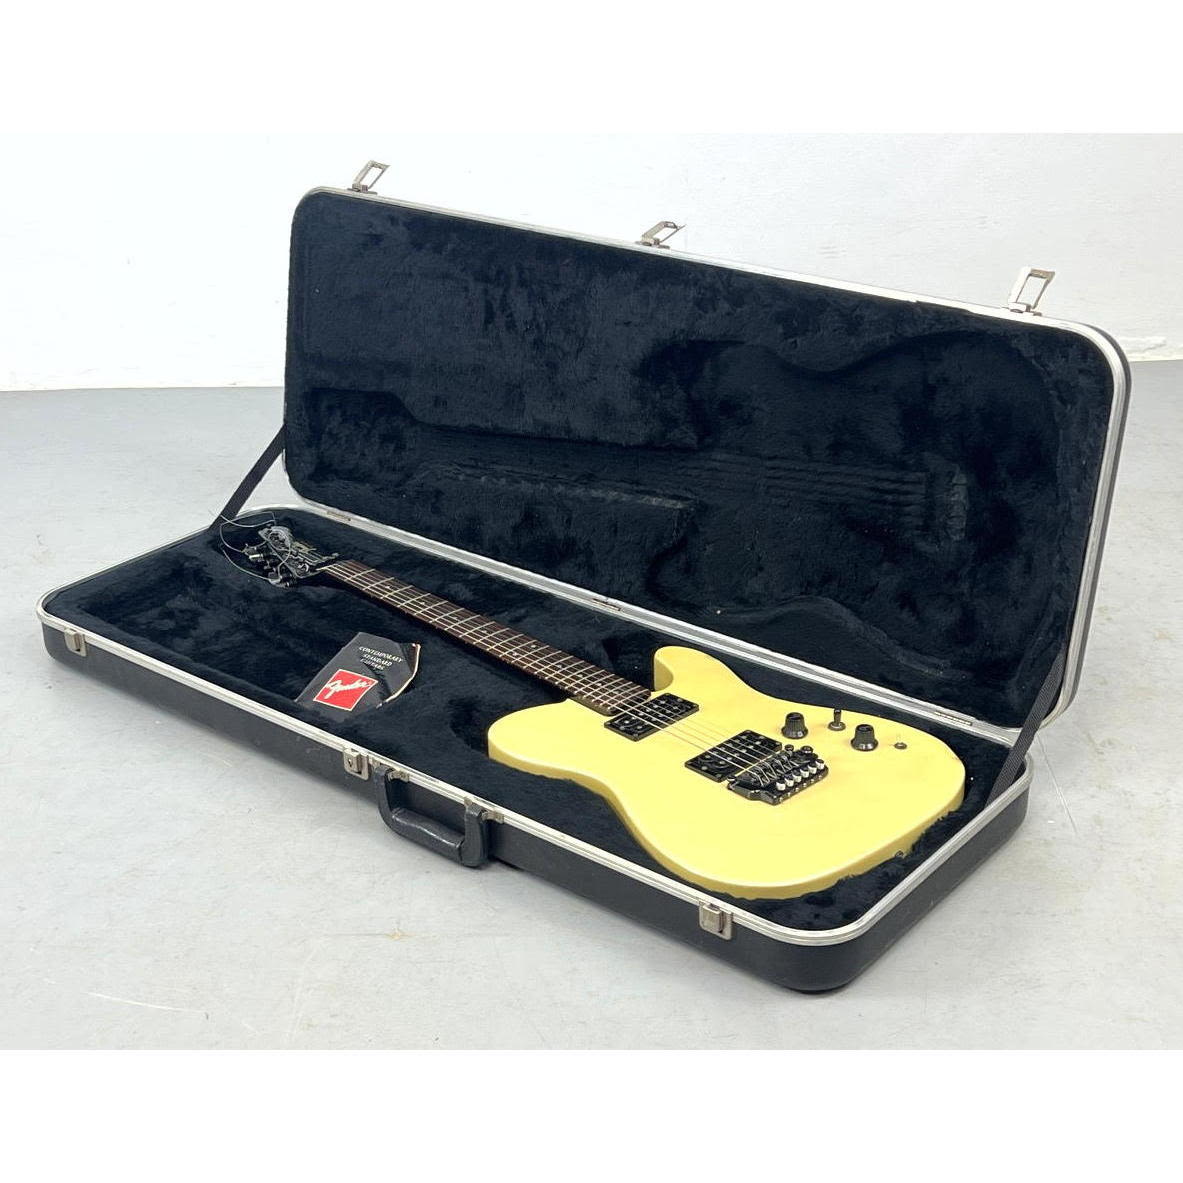 FENDER Telecaster Guitar in Case.